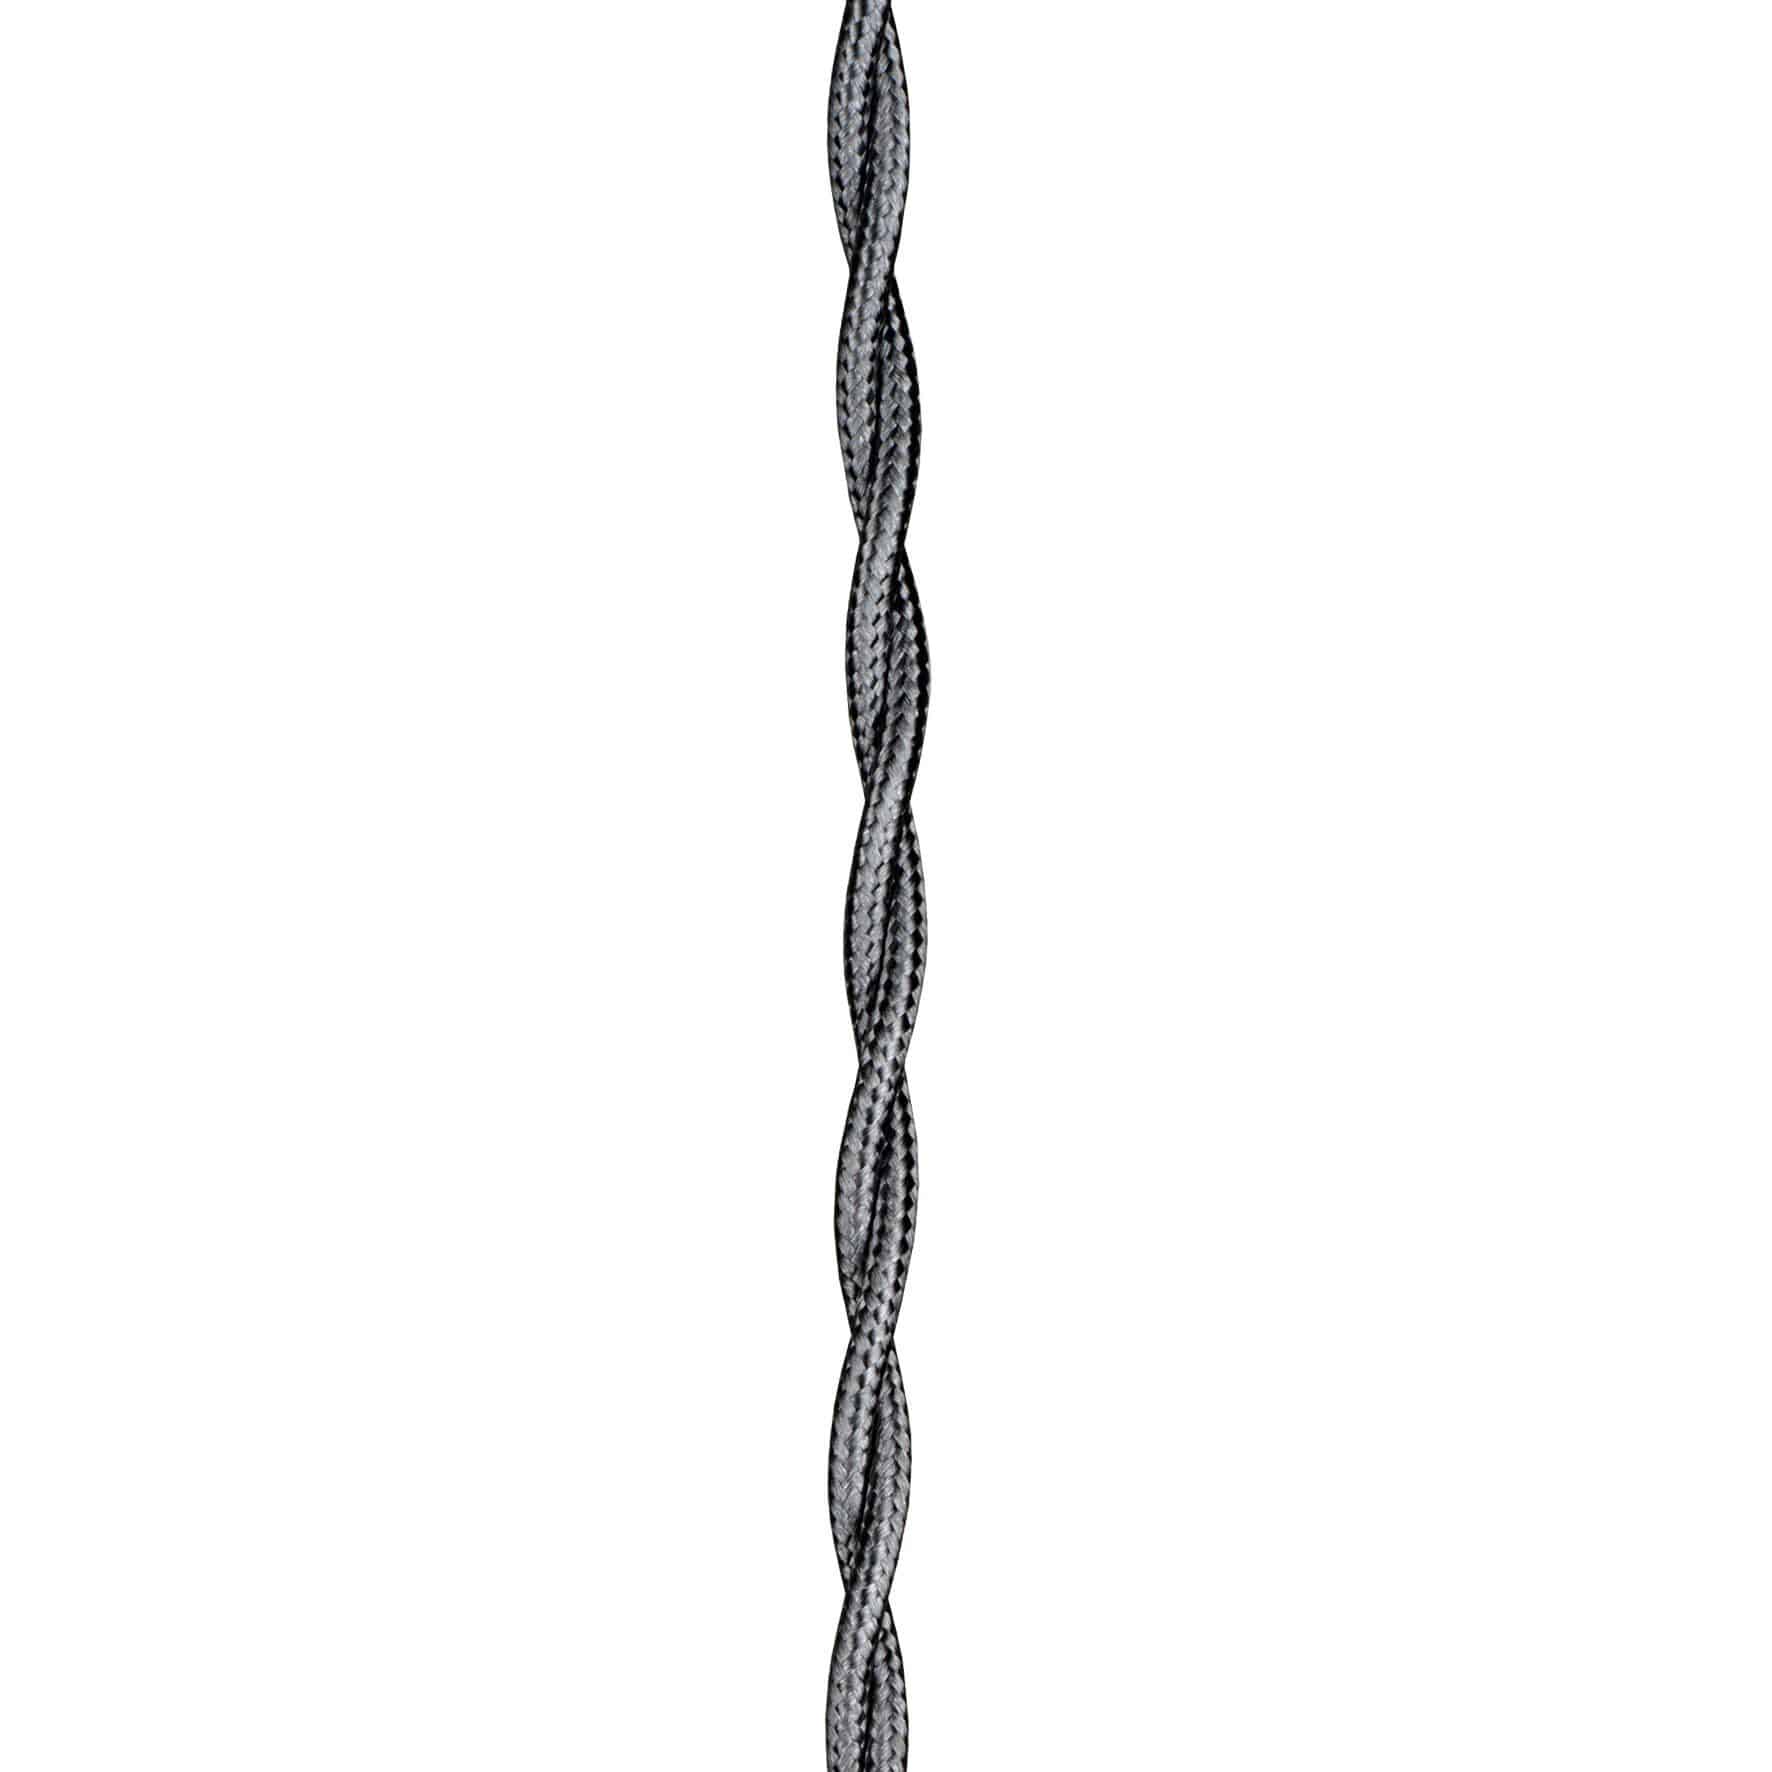 BAILEY 140315 Textilkabel 2x0,75mm², gedreht, Länge 3m, silber metallic